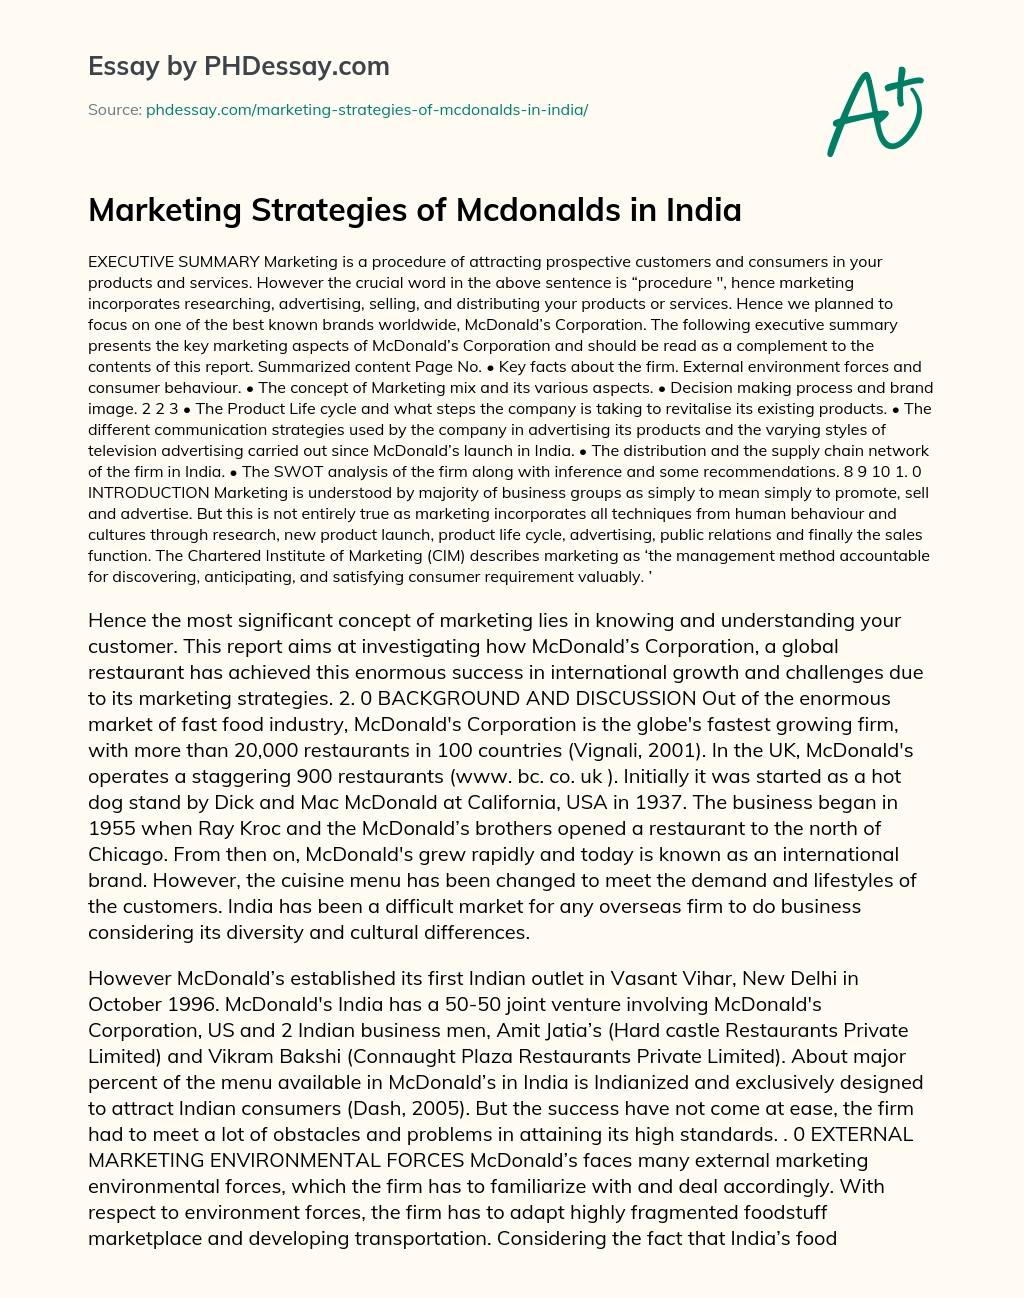 Marketing Strategies of Mcdonalds in India essay